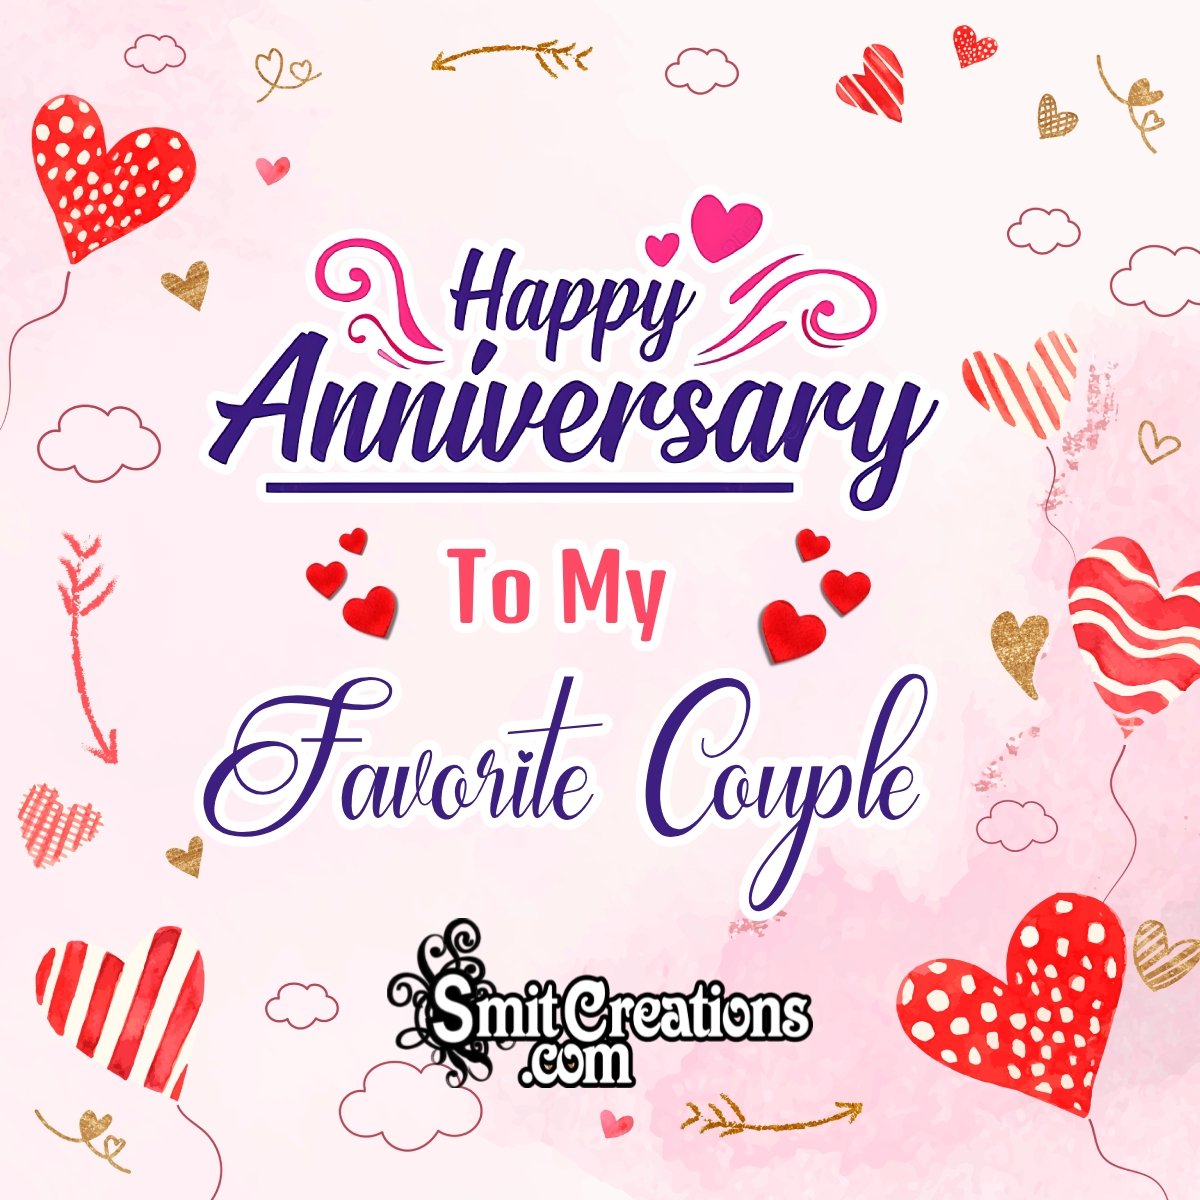 Happy Anniversary To My Favorite Couple